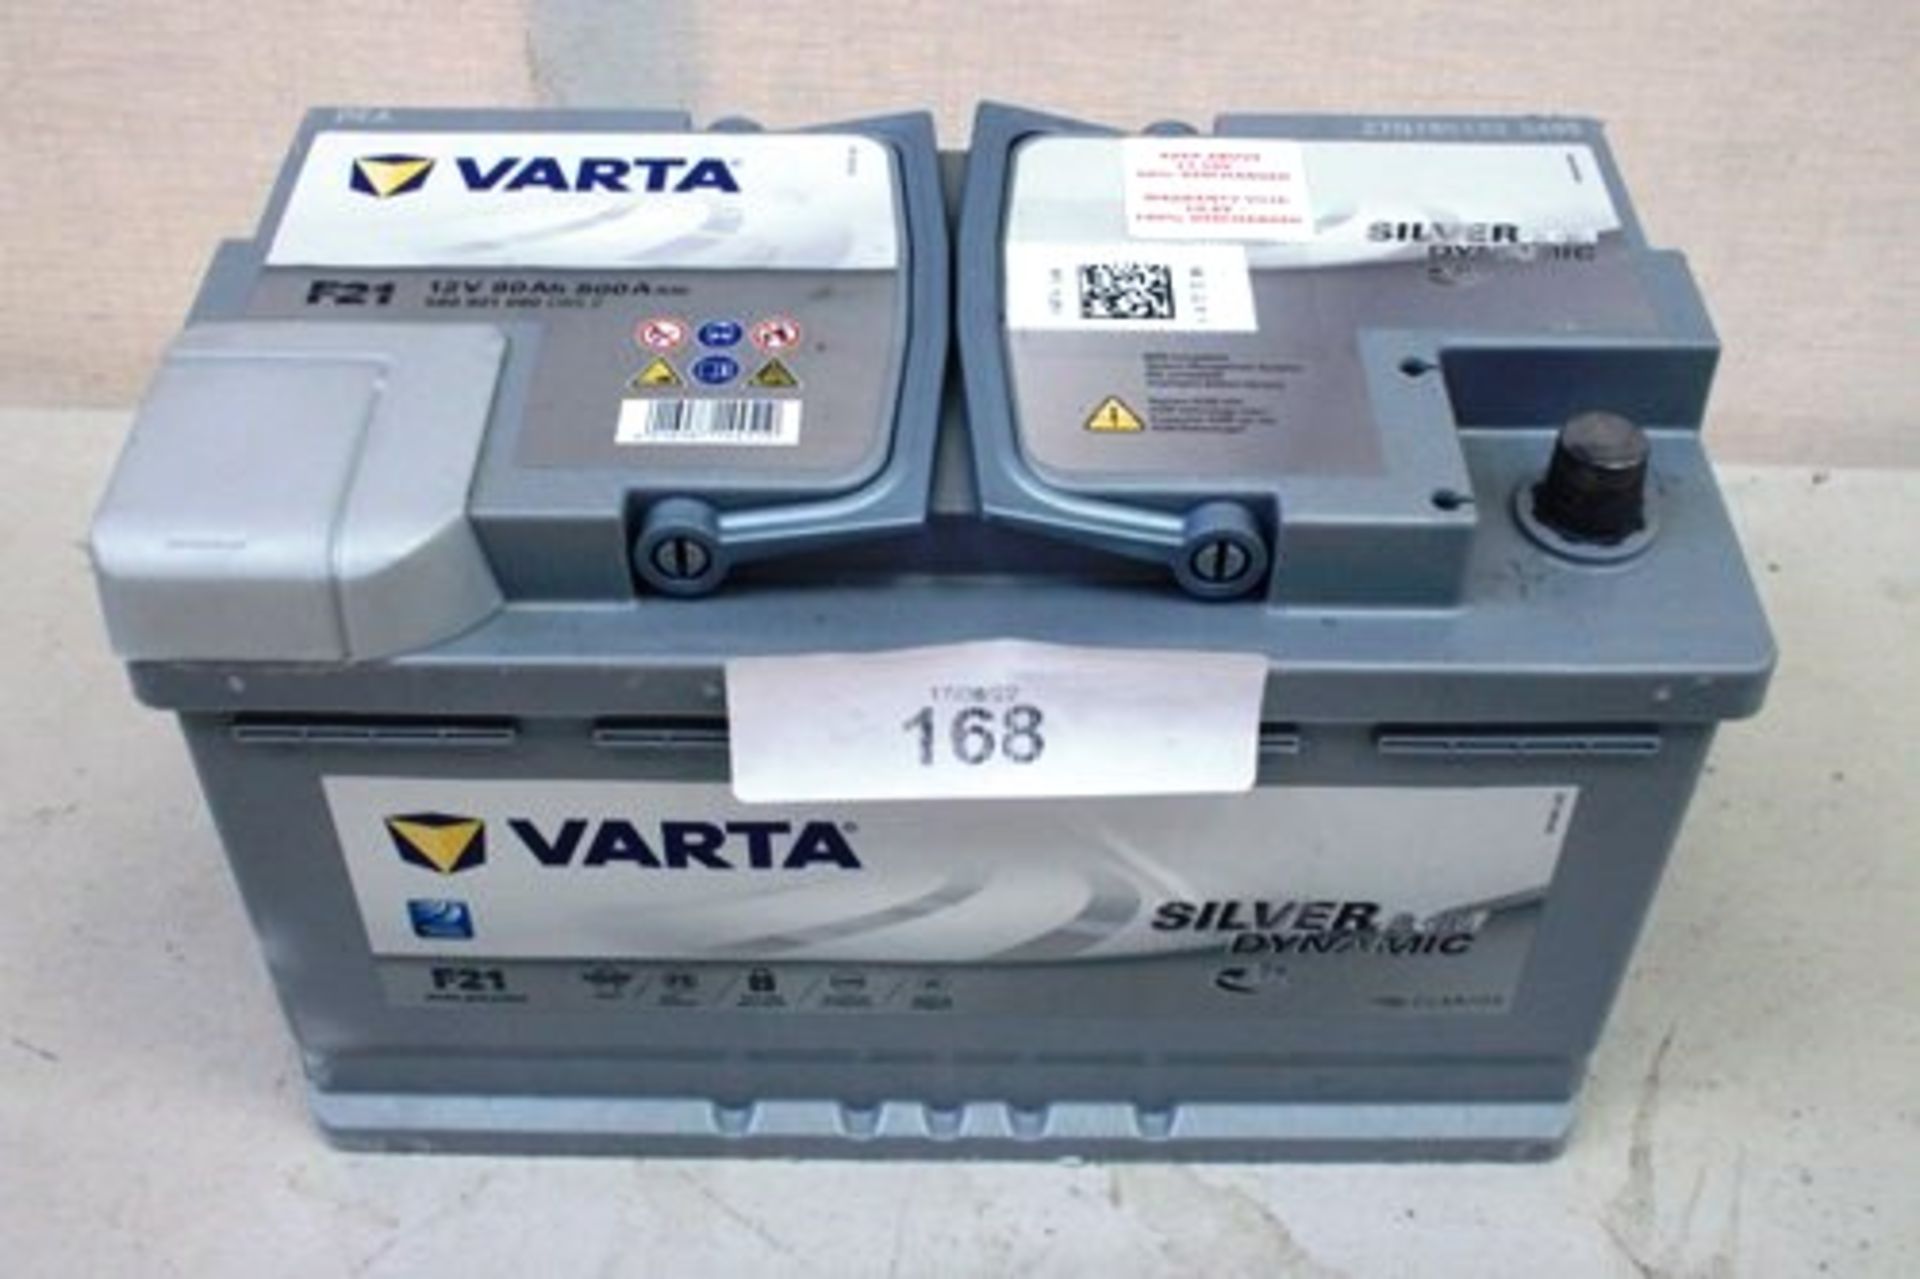 1 x Varta F22 12V 80 amp hour 800 amp silver dynamic battery - New (GS6)